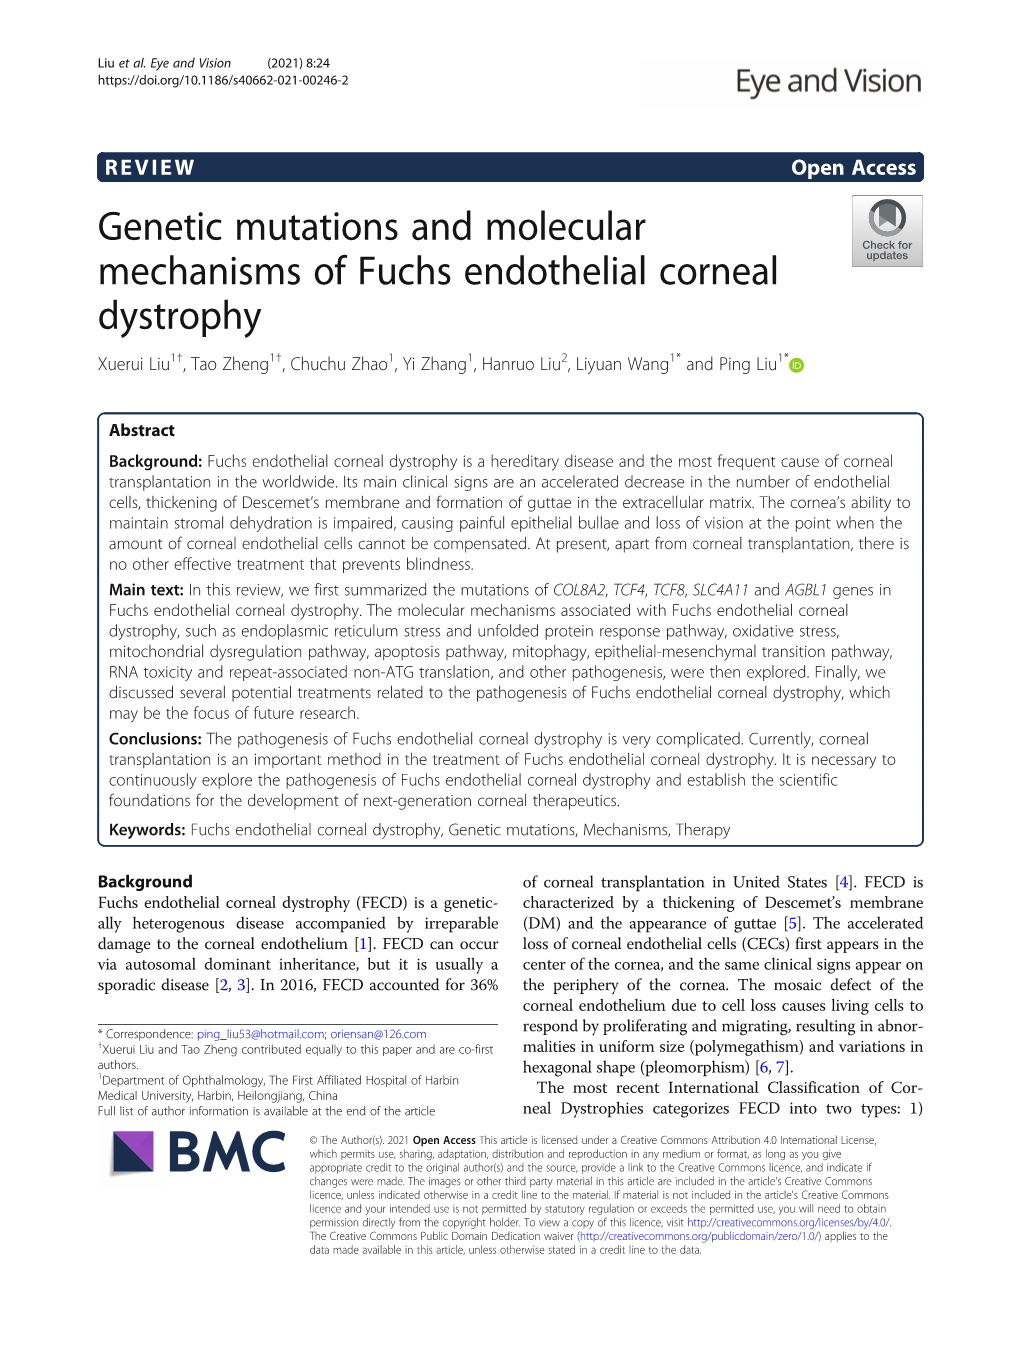 Genetic Mutations and Molecular Mechanisms of Fuchs Endothelial